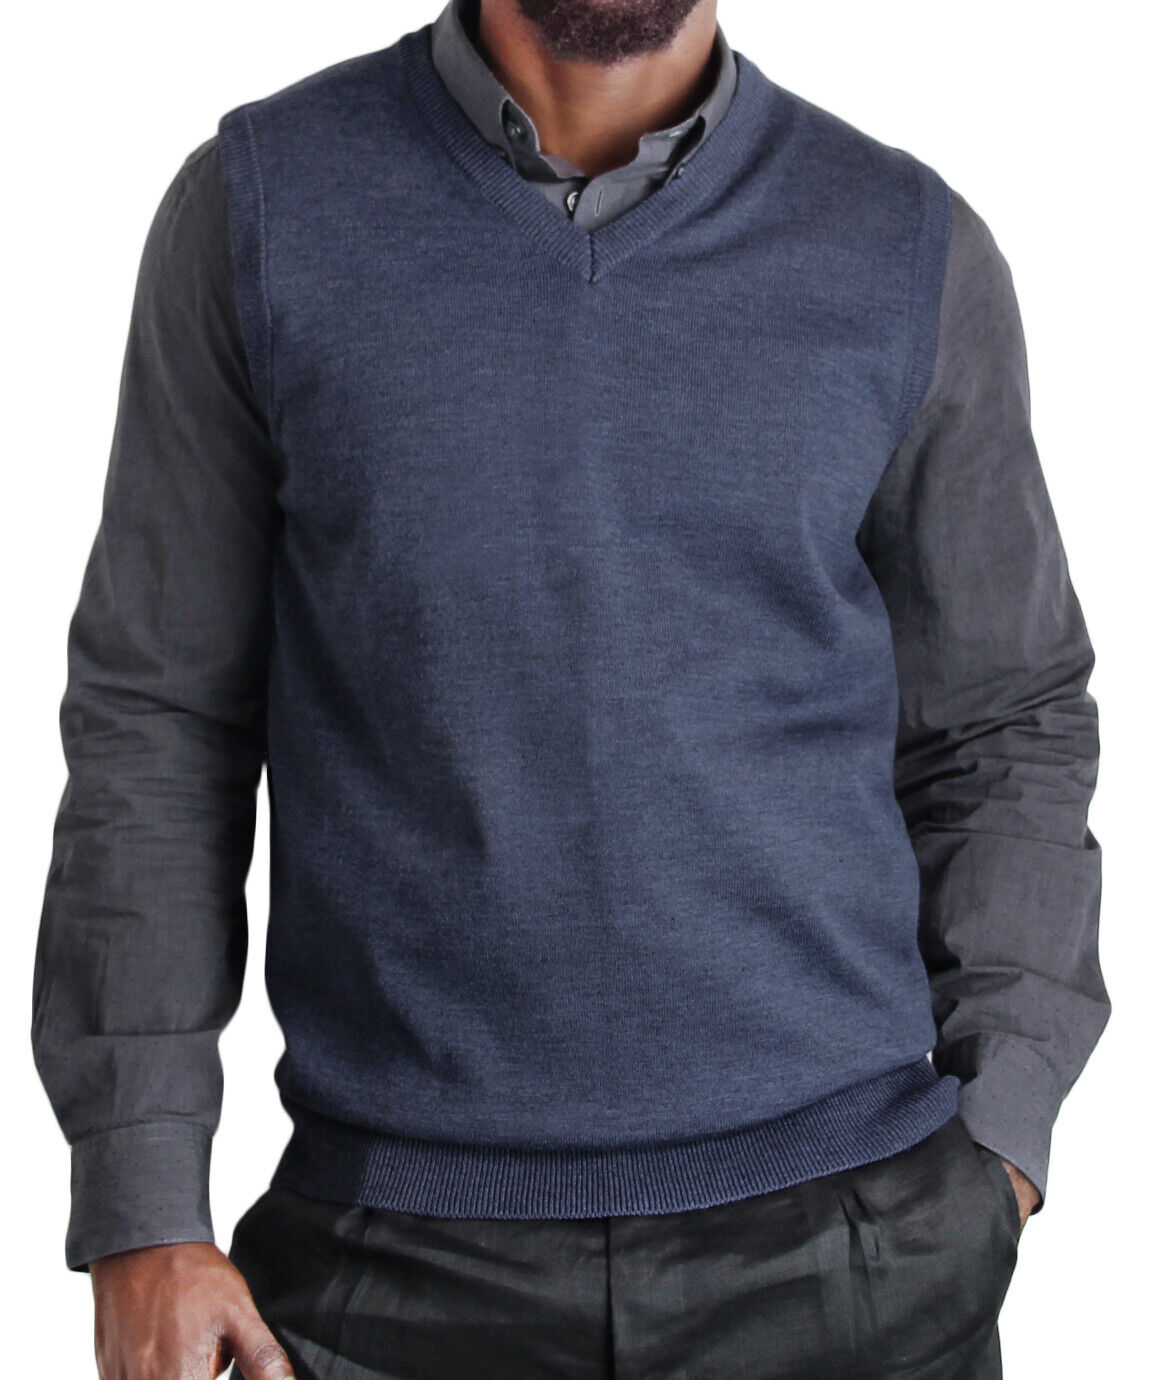 Blue Ocean Mens Casual Sweater Vest (sv-280)